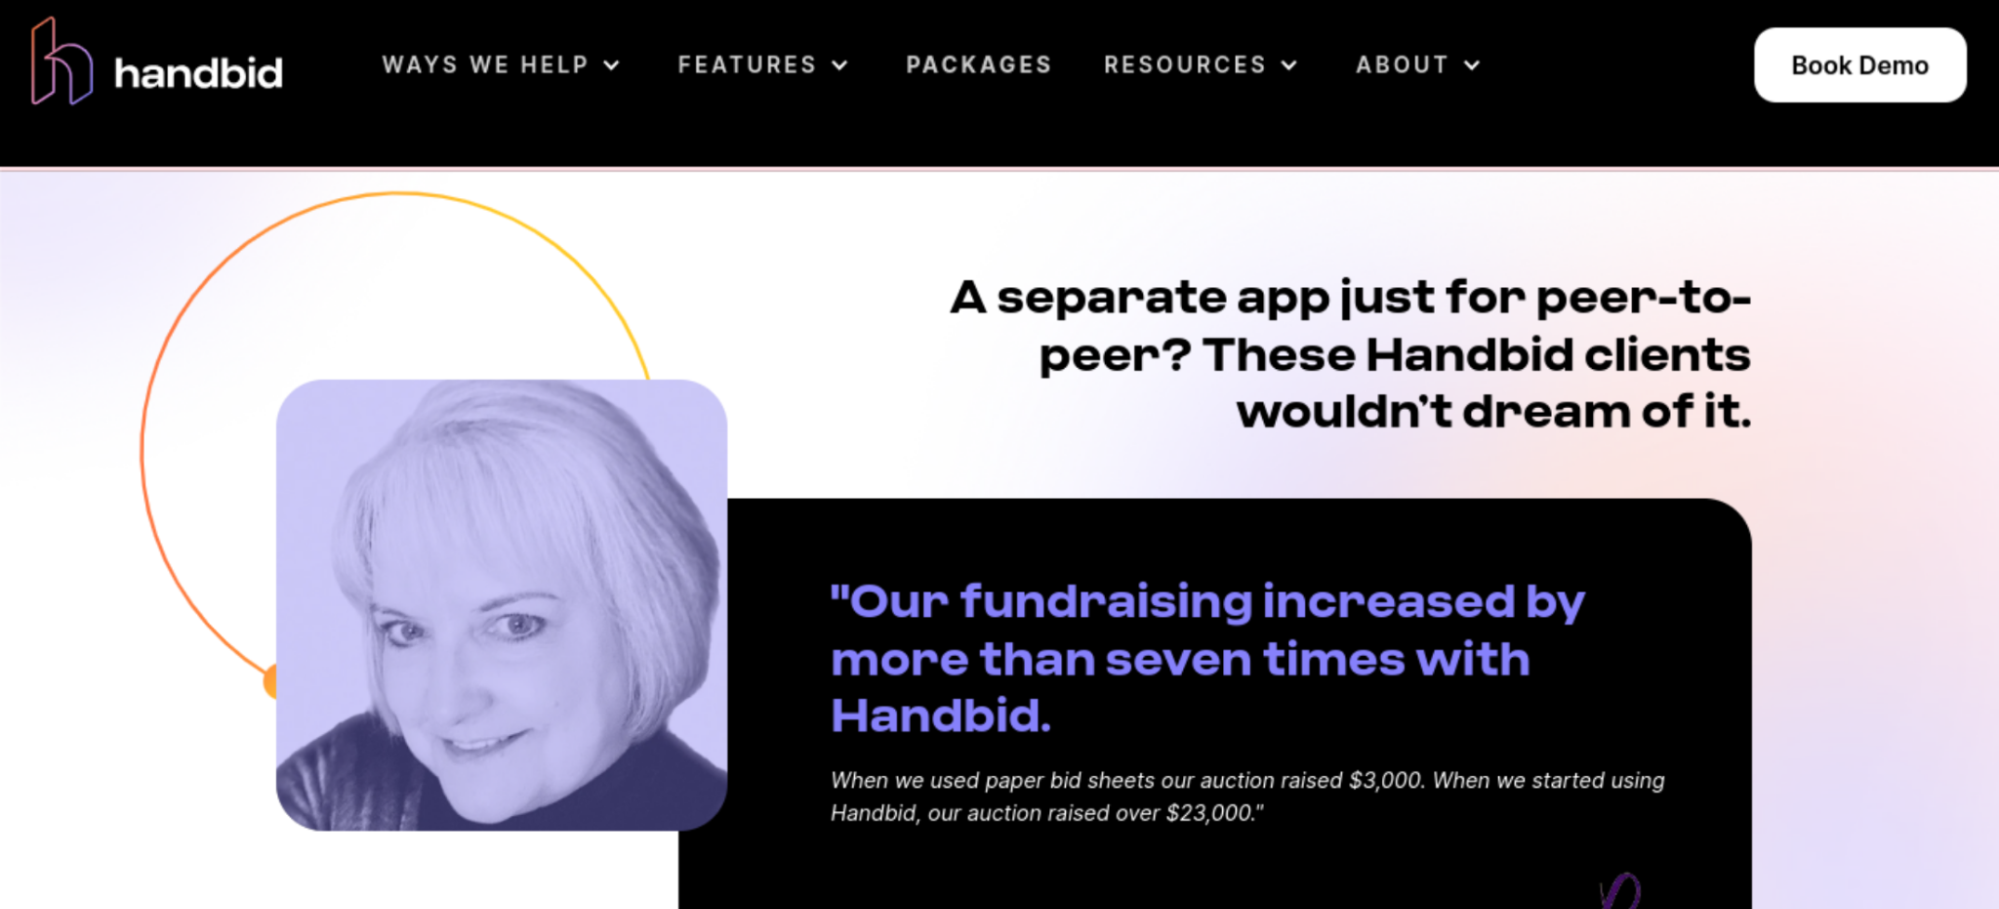 Handbig mobile auction platform plus crowdfunding